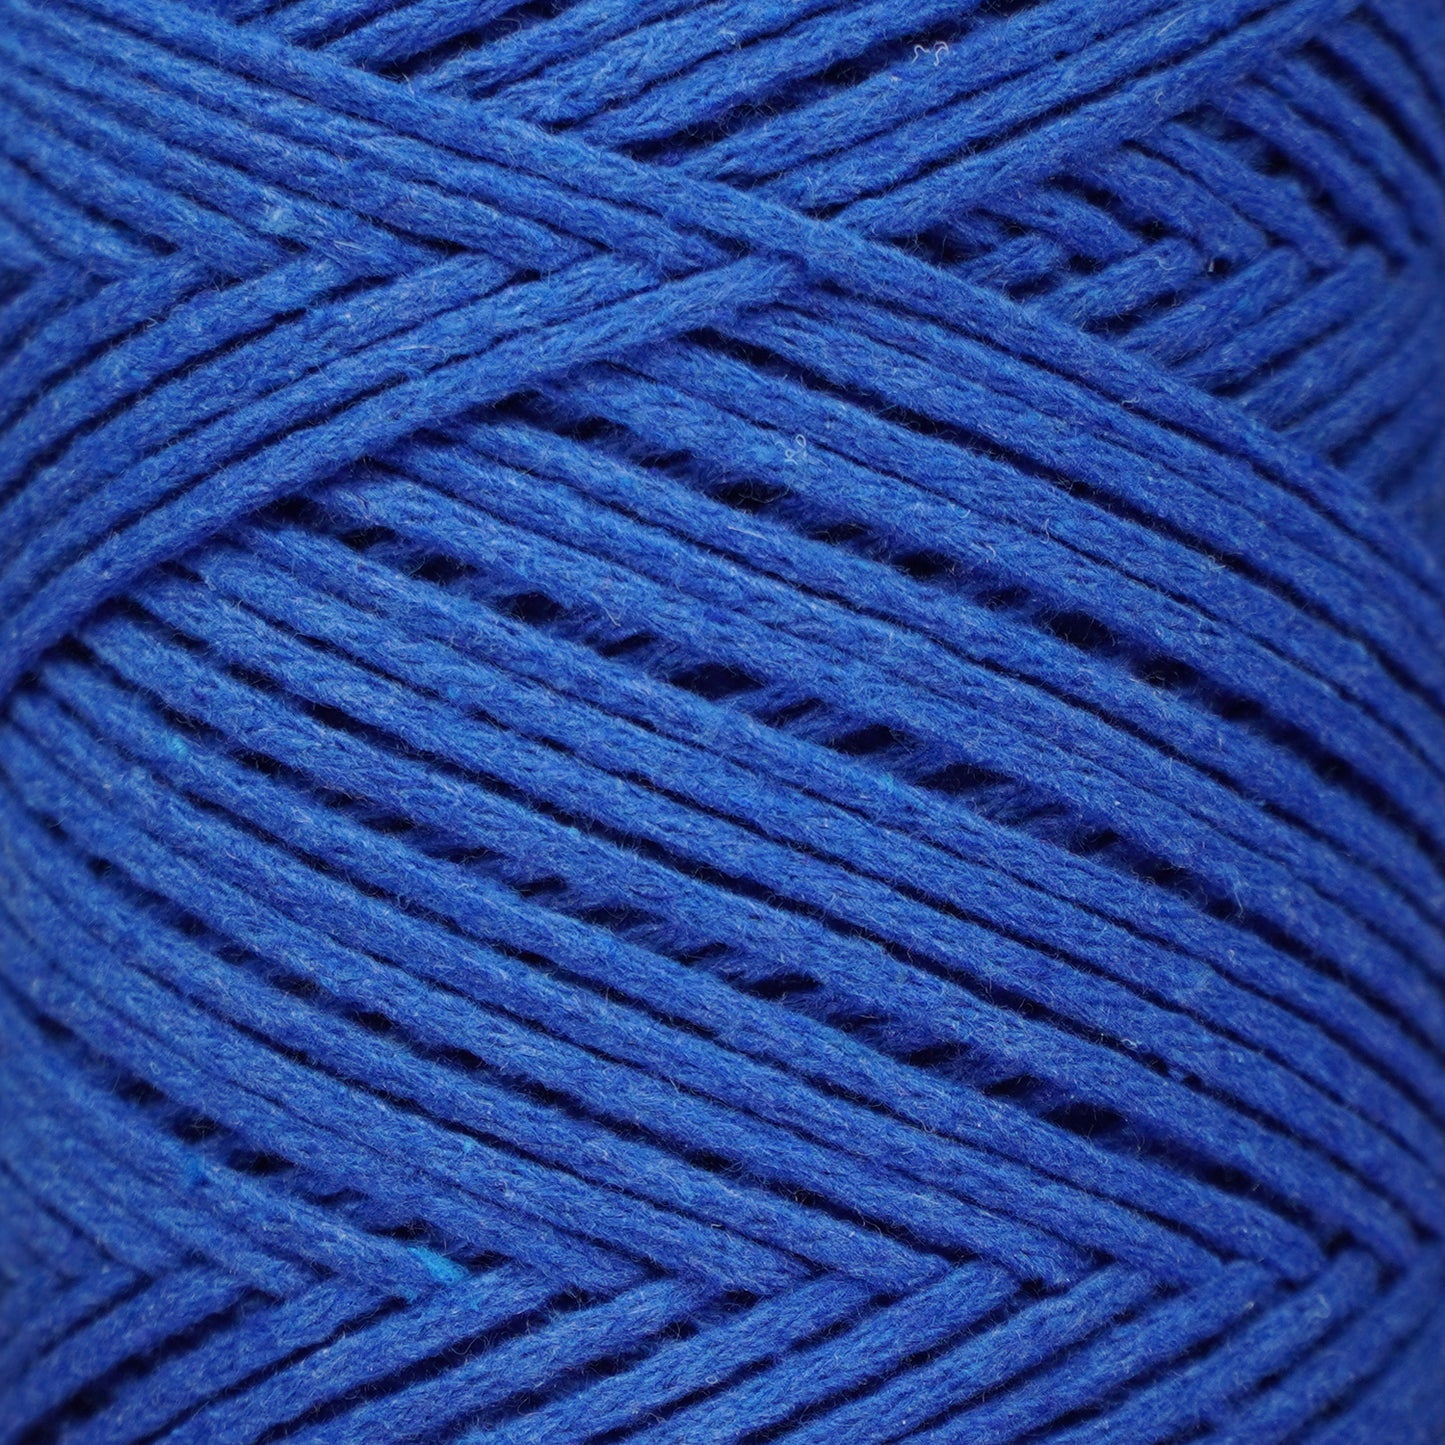 Cotton Macrame Cord 2mm x 195 Yards (590 feet) 2mm - Sax Blue